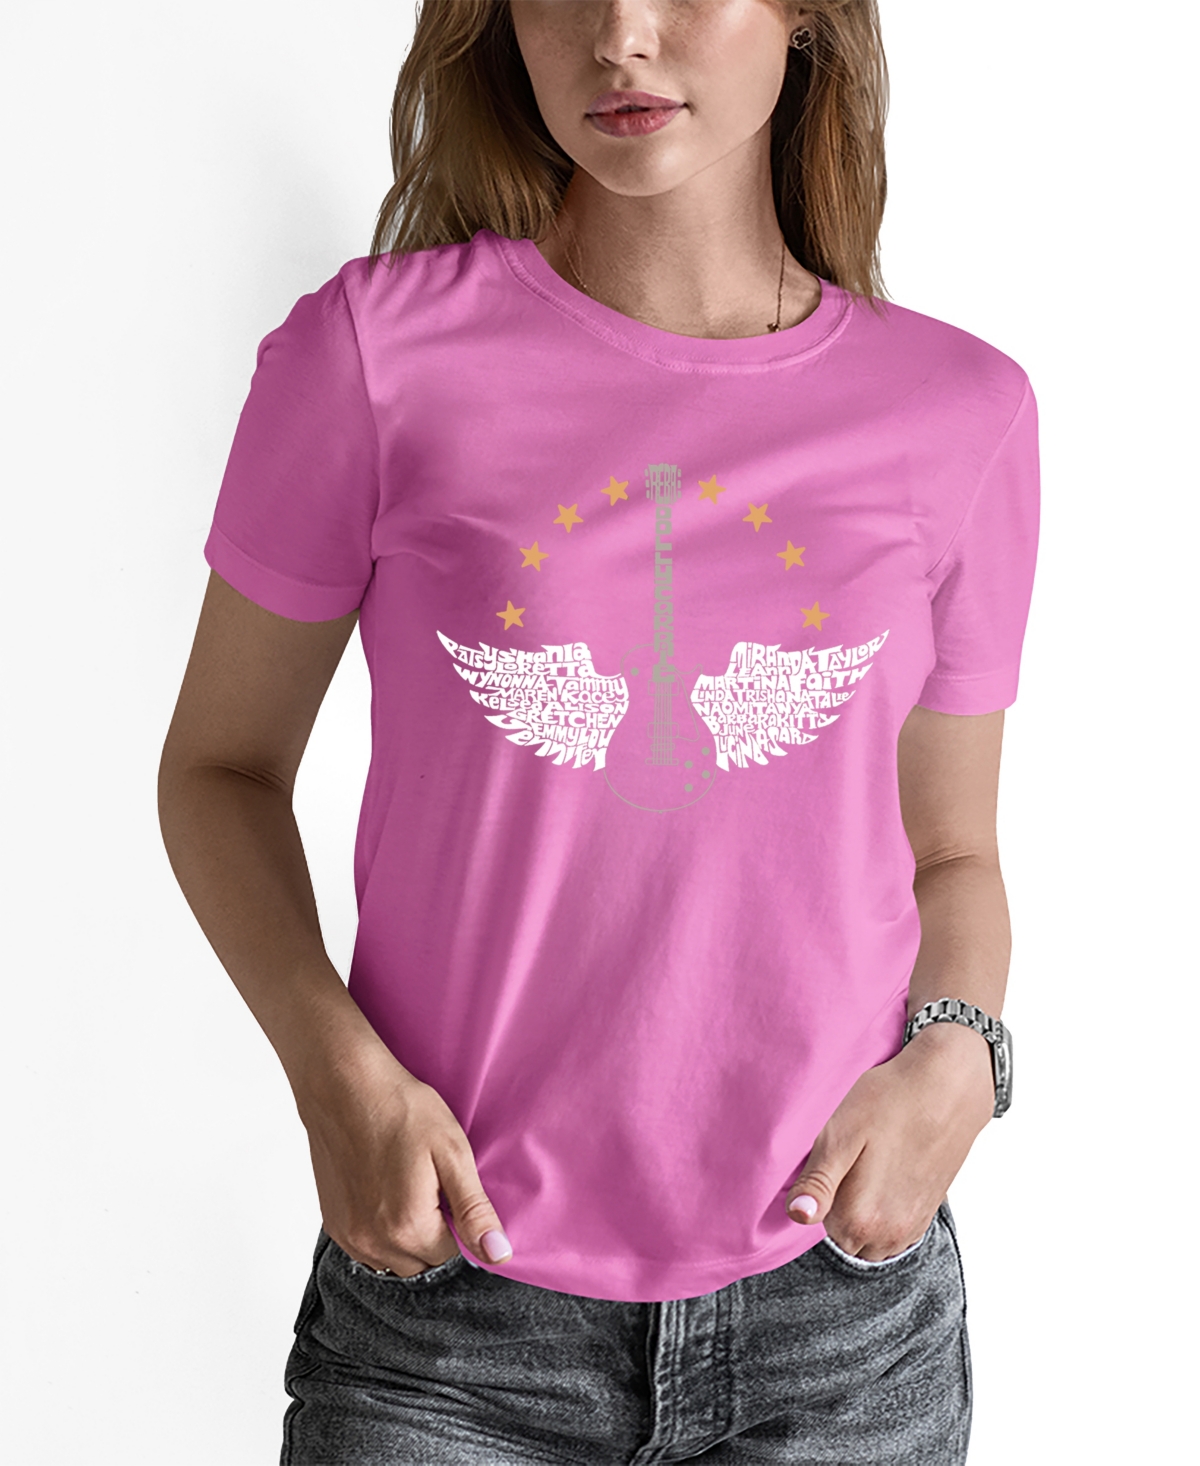 La Pop ArtWomen's Word Art Country Female Singers T-Shirt - Pink